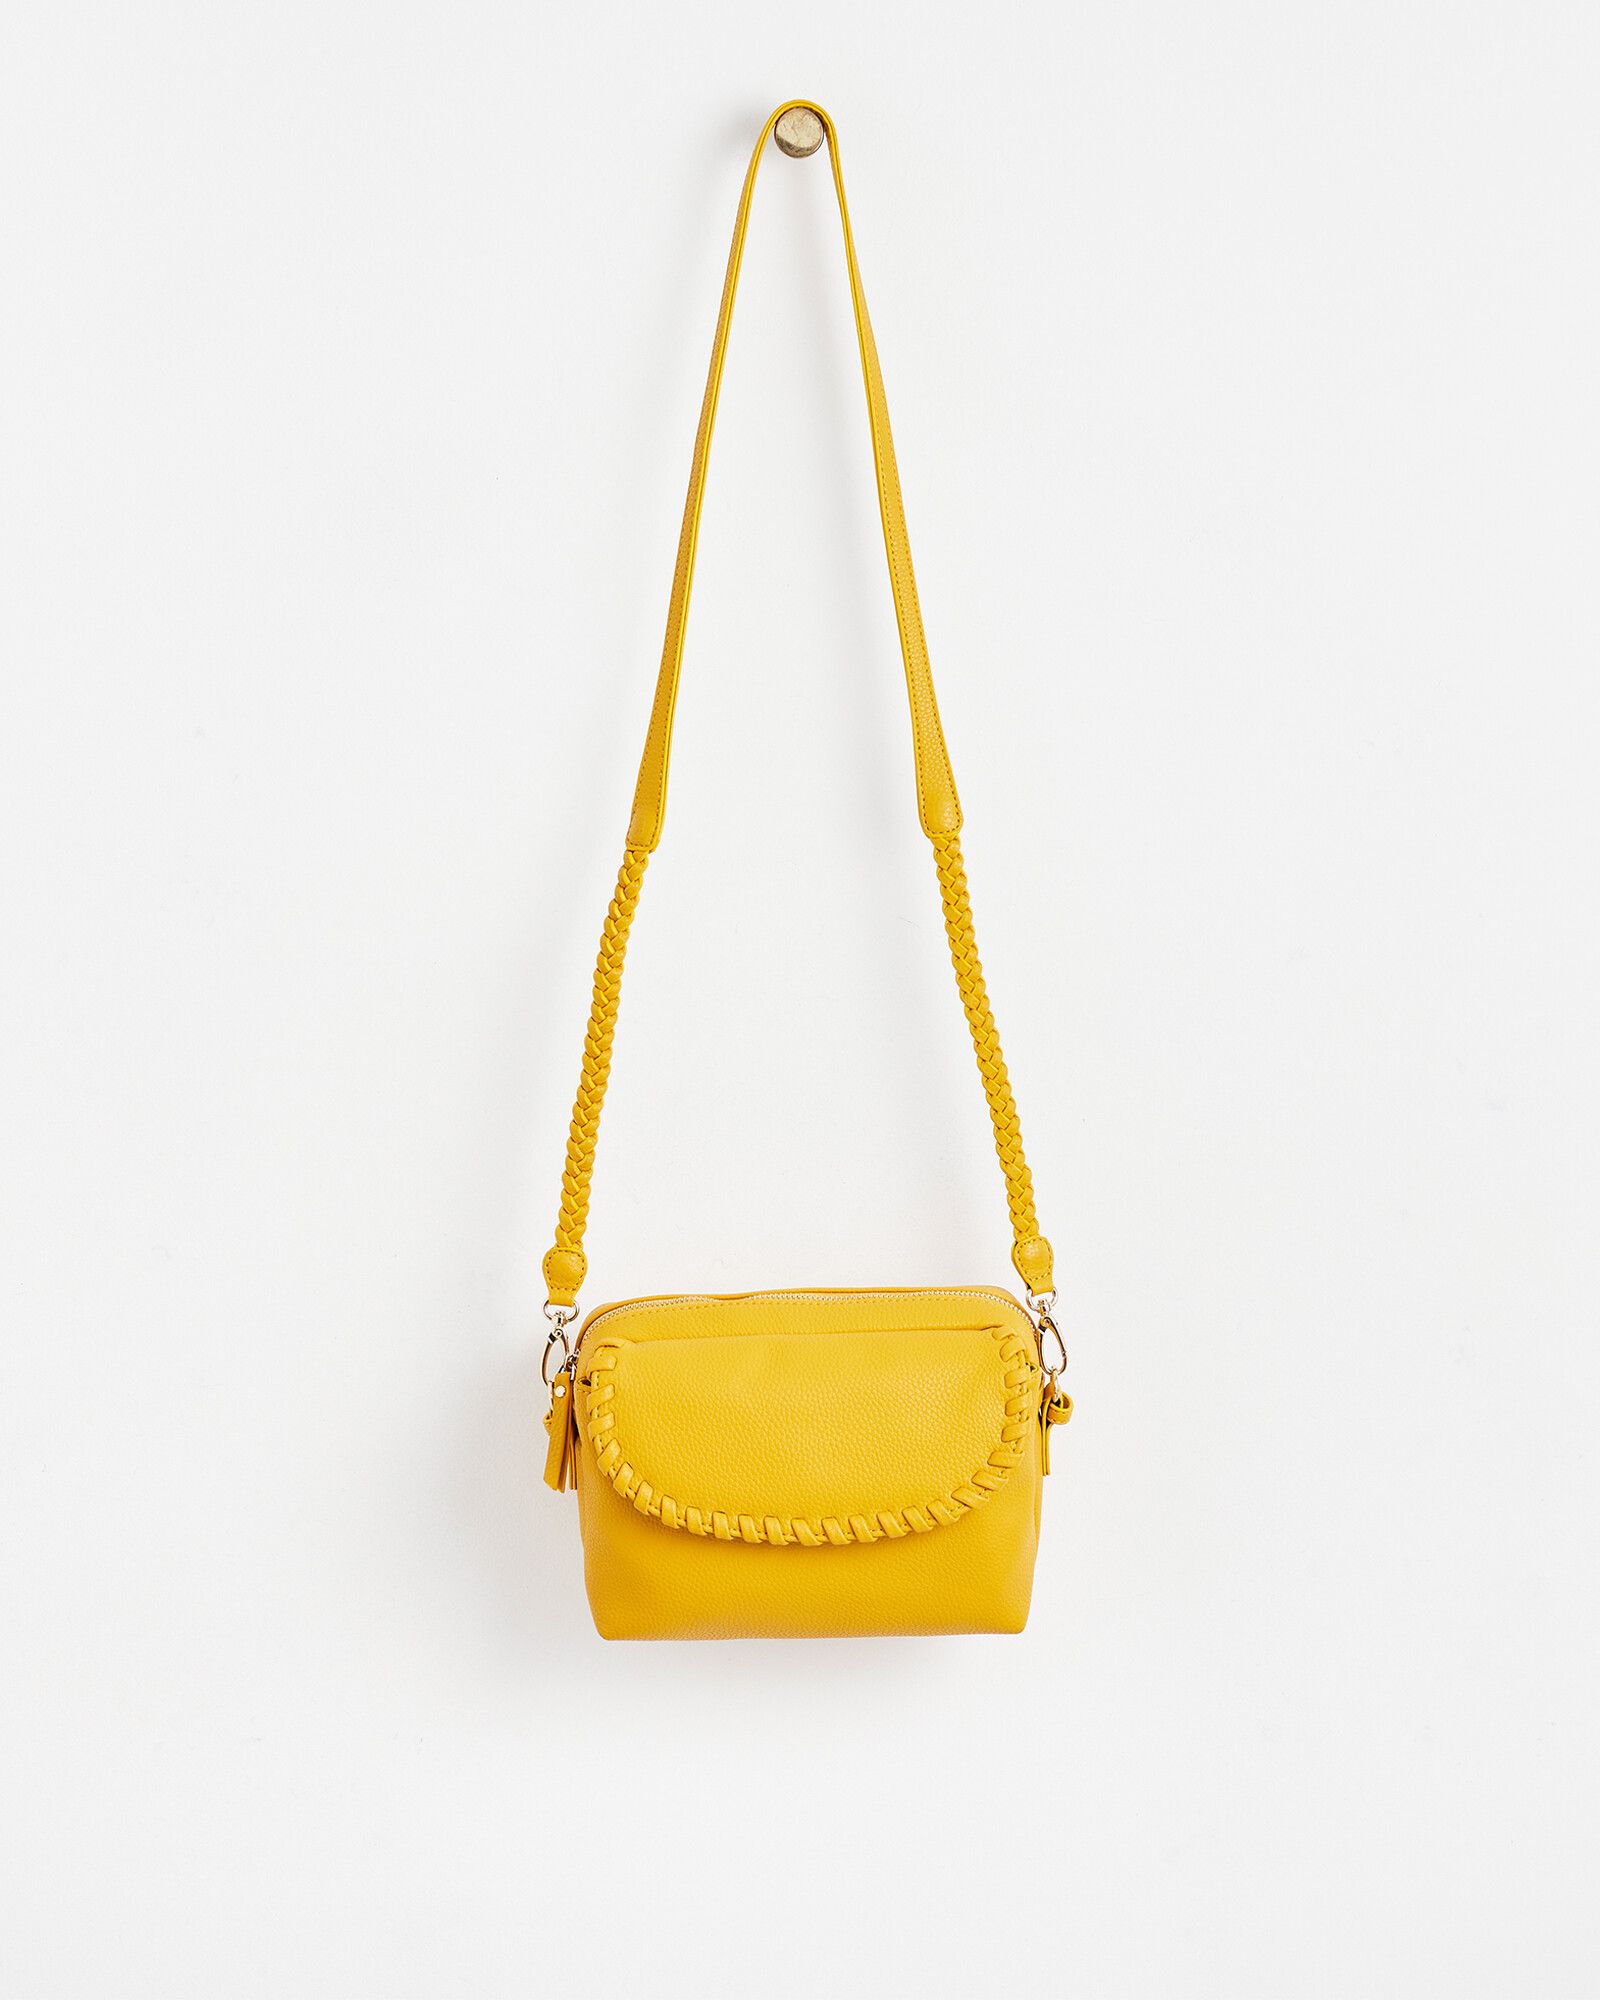 Mila Louise Obaya Tr Women's Cross-Body Bag, Yellow (Honey